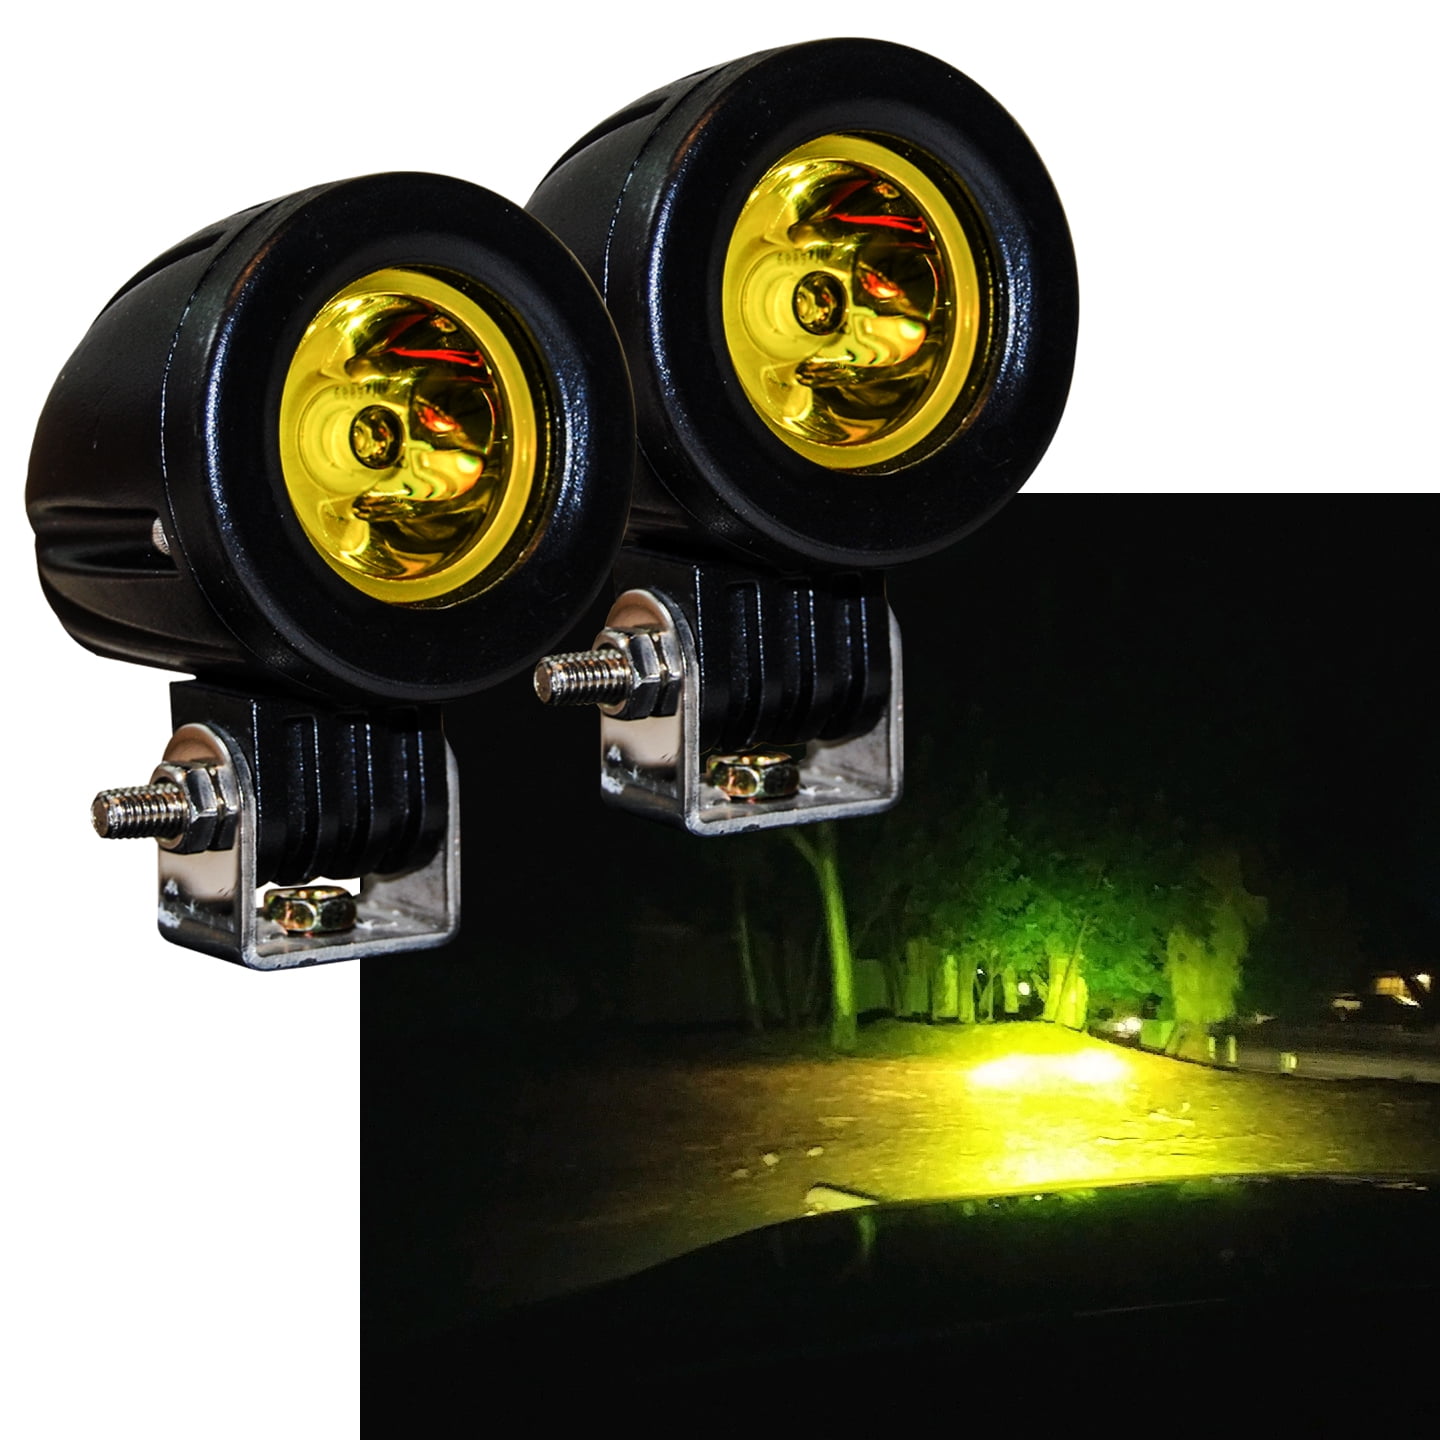 LED indicators flat fairing mount clear lens amber leds self adhesive back